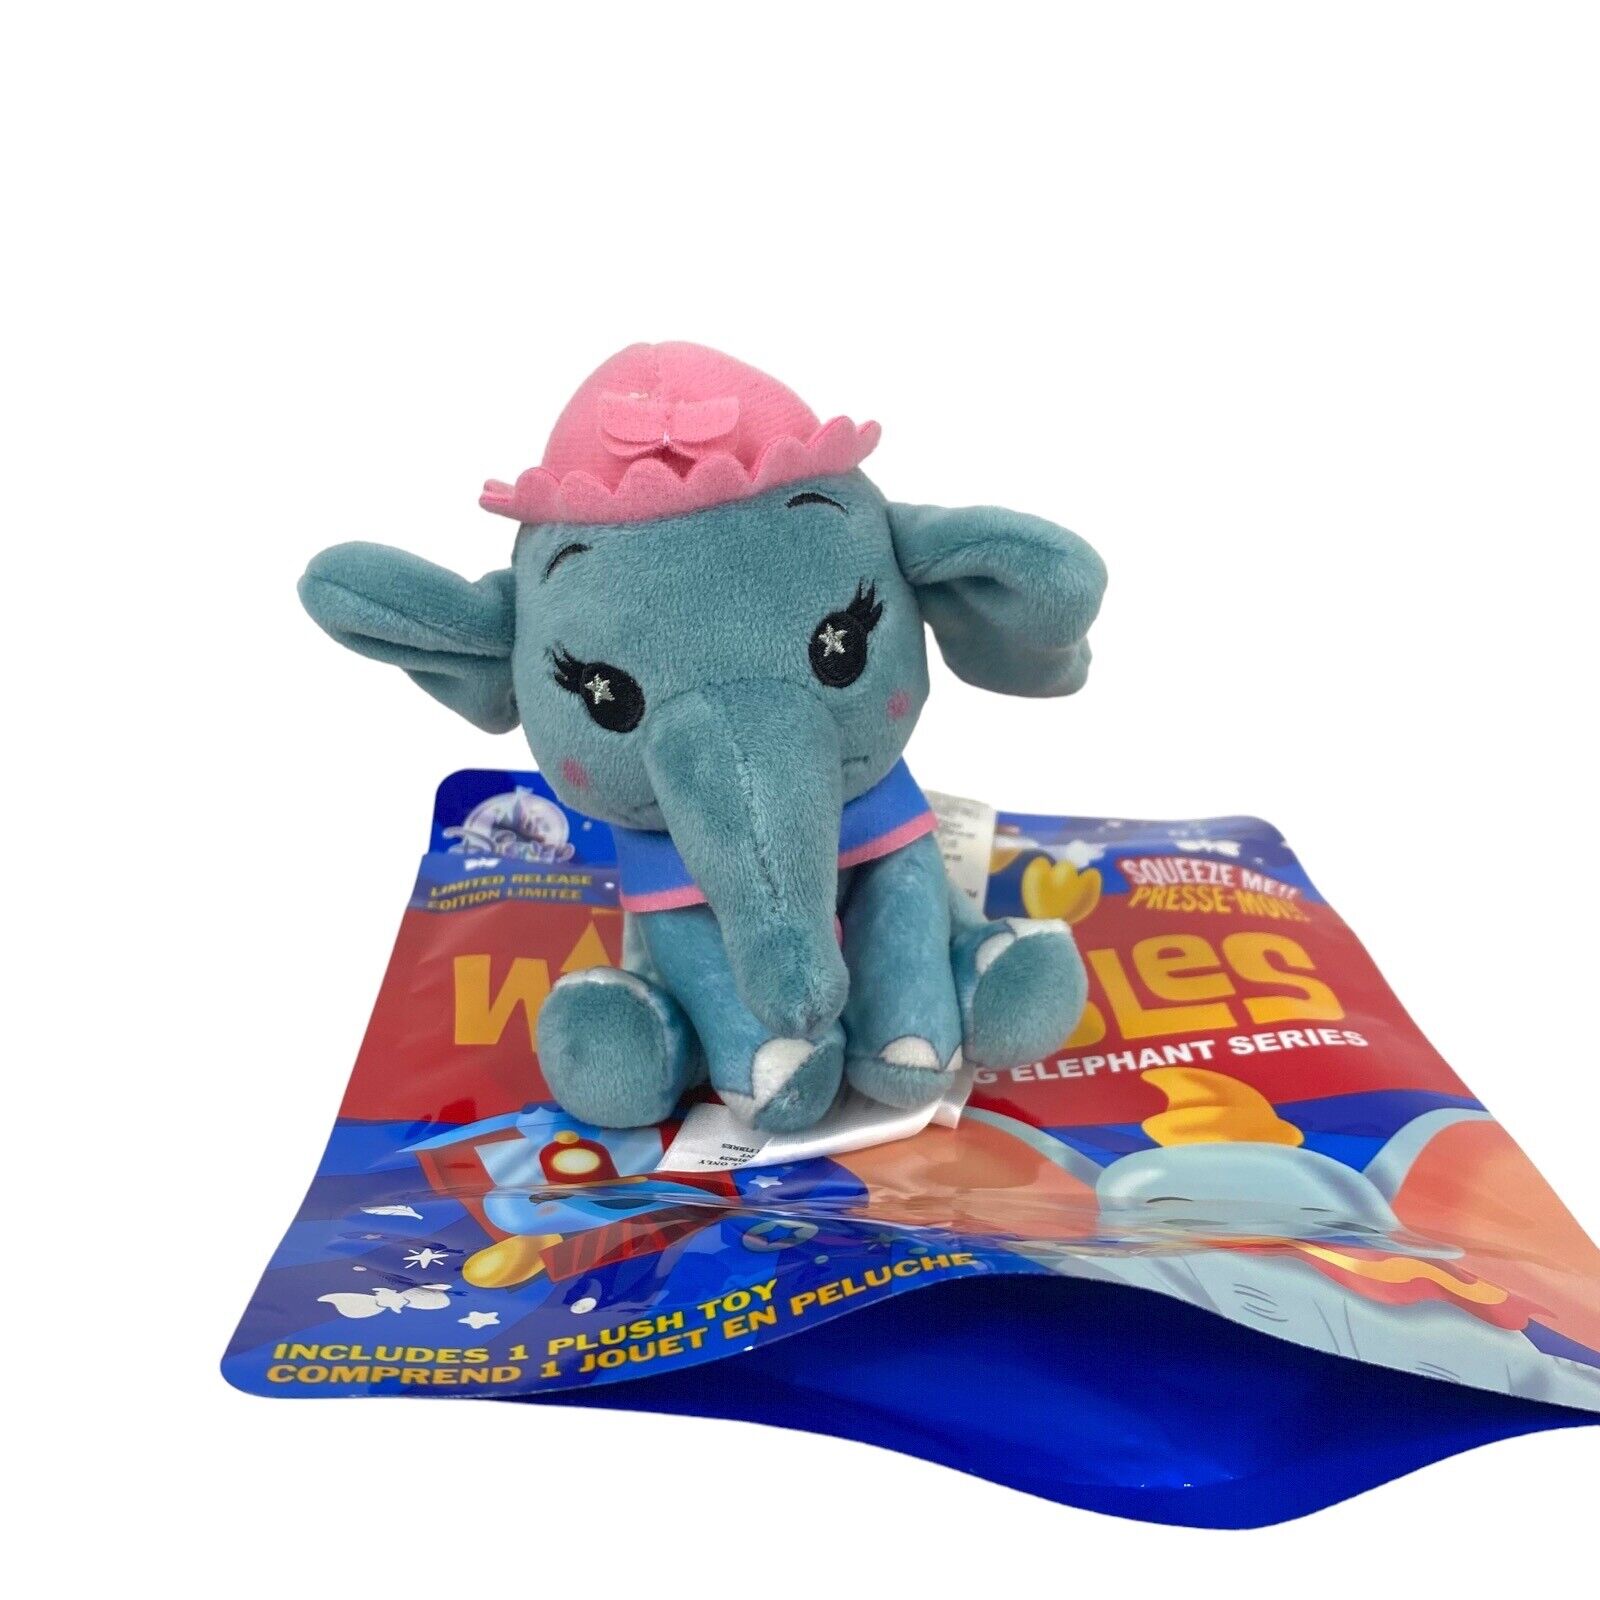 Disney Parks Wishables Dumbo the Flying Elephant Series Plush - Mrs Jumbo